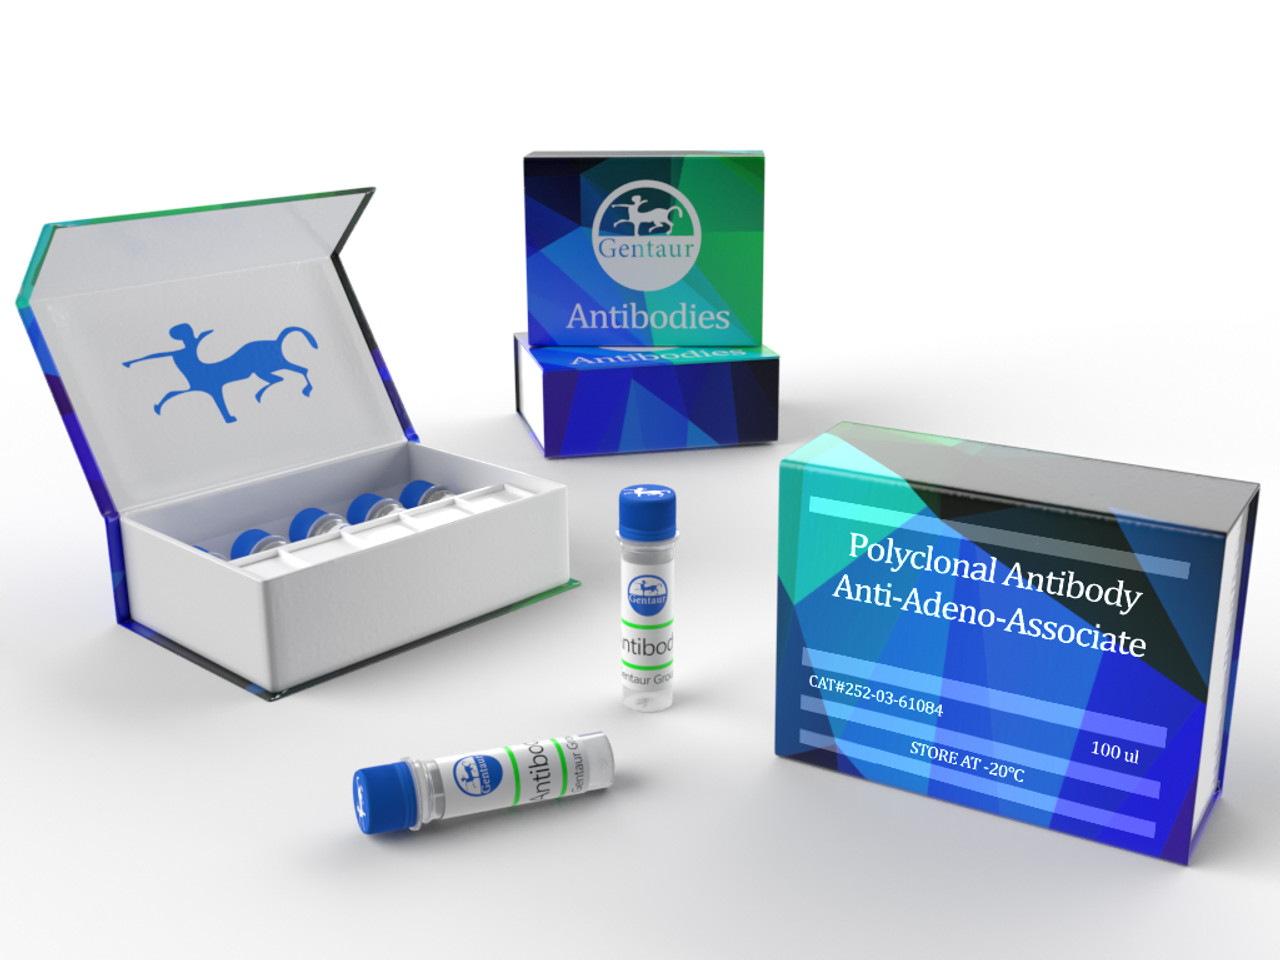 Polyclonal Antibody Anti-Adeno-Associate